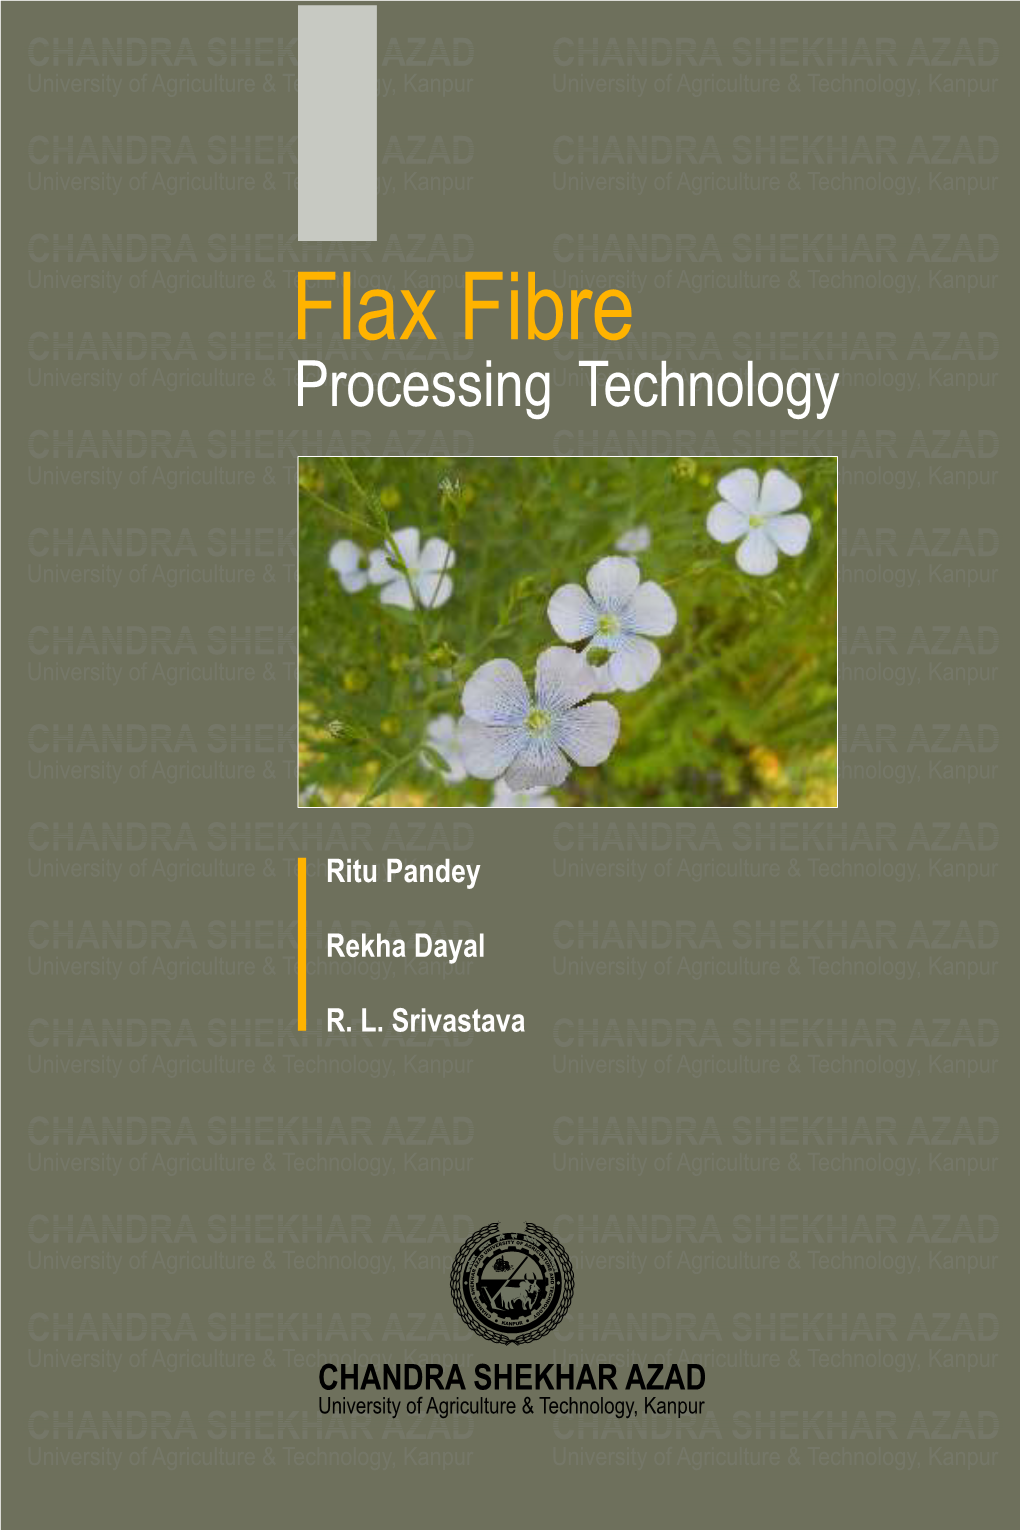 Flax Fibre Processing Technology